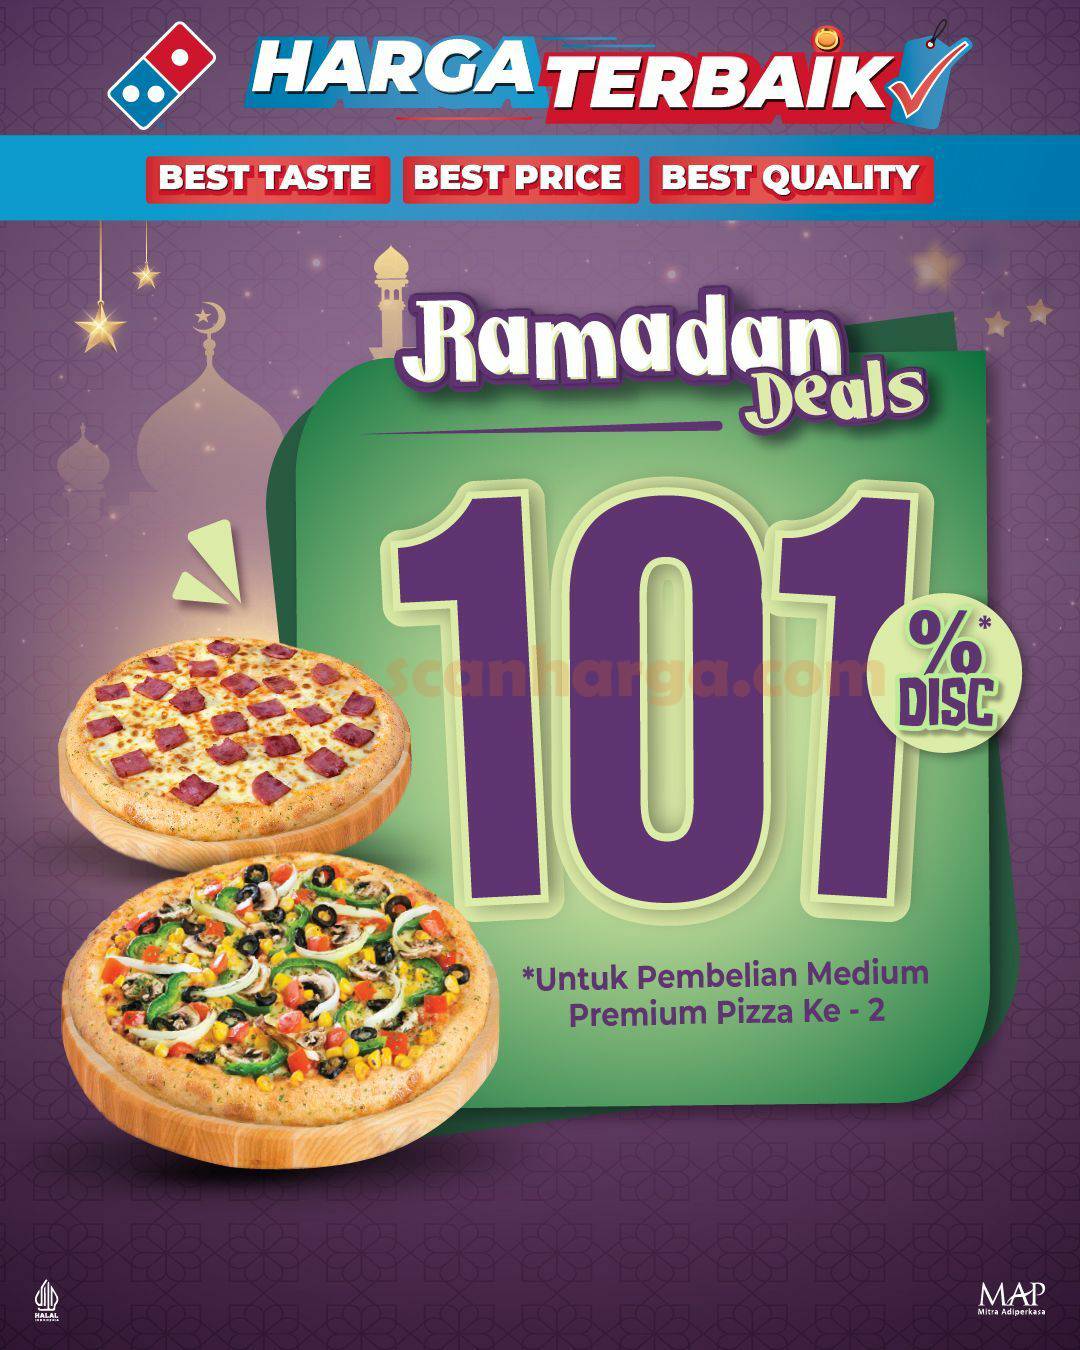 Promo Dominos Pizza Ramadan Deals Dison 101% Pizza Ke-2